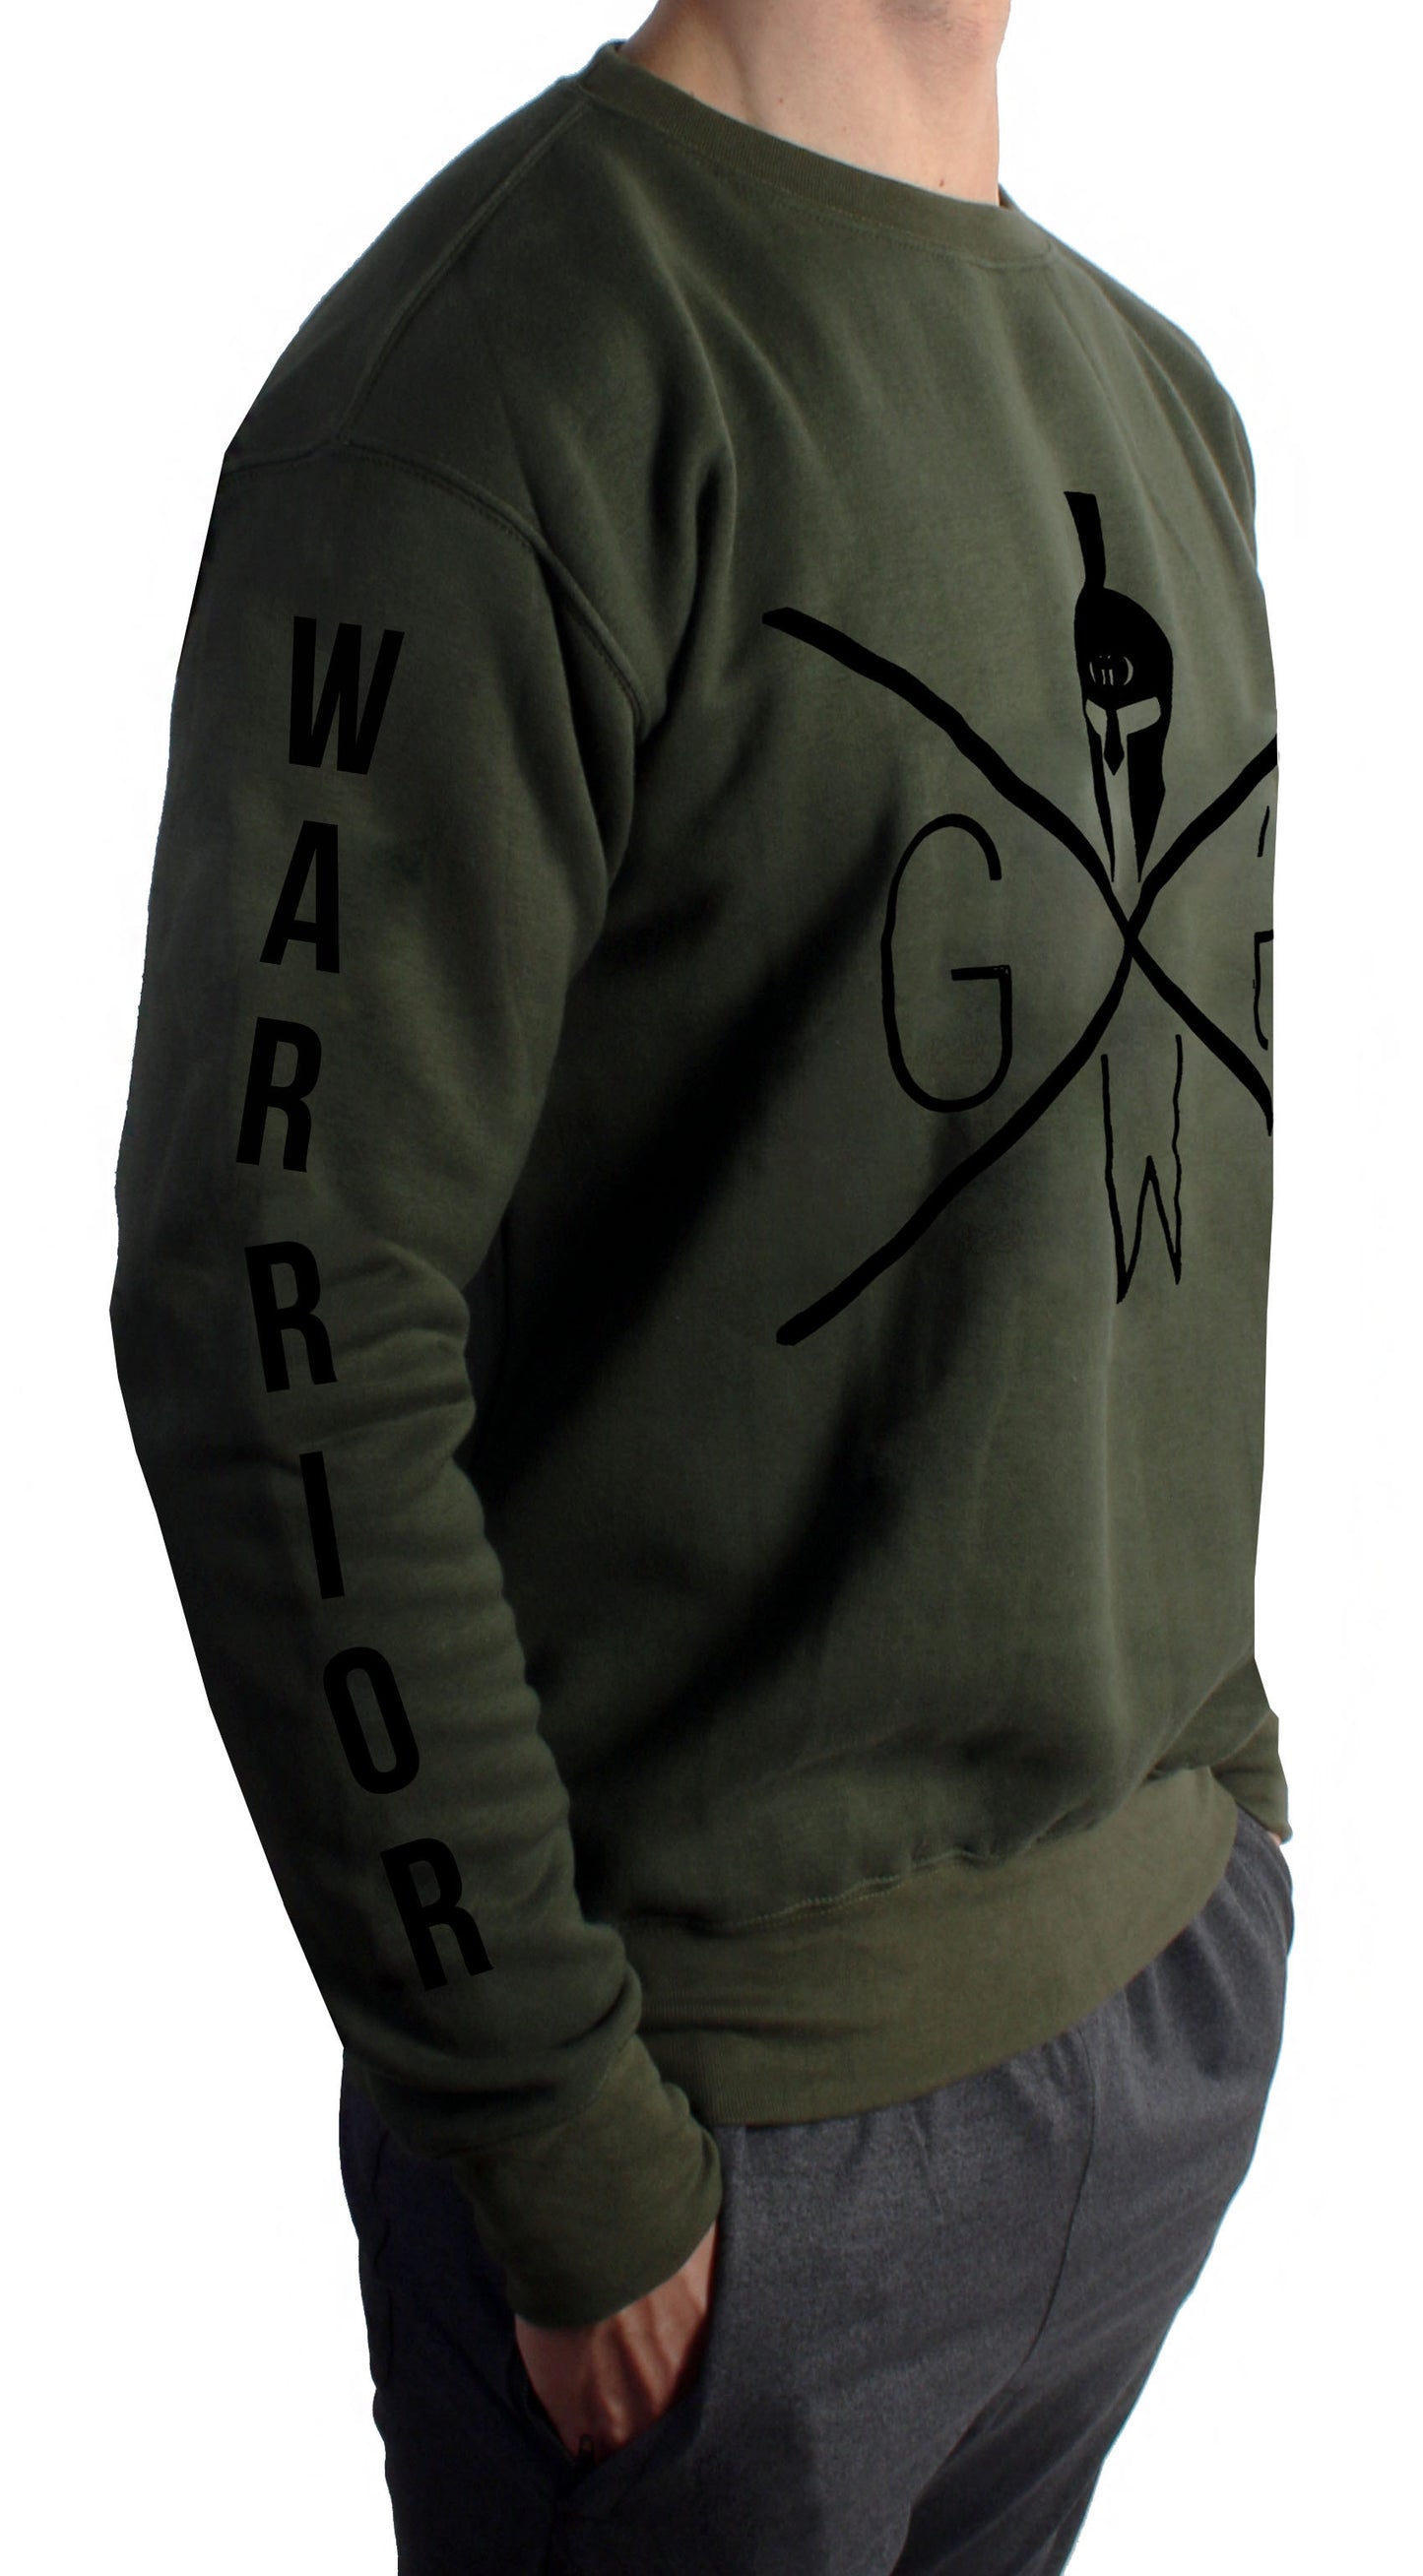 Warrior Sweater - Olive